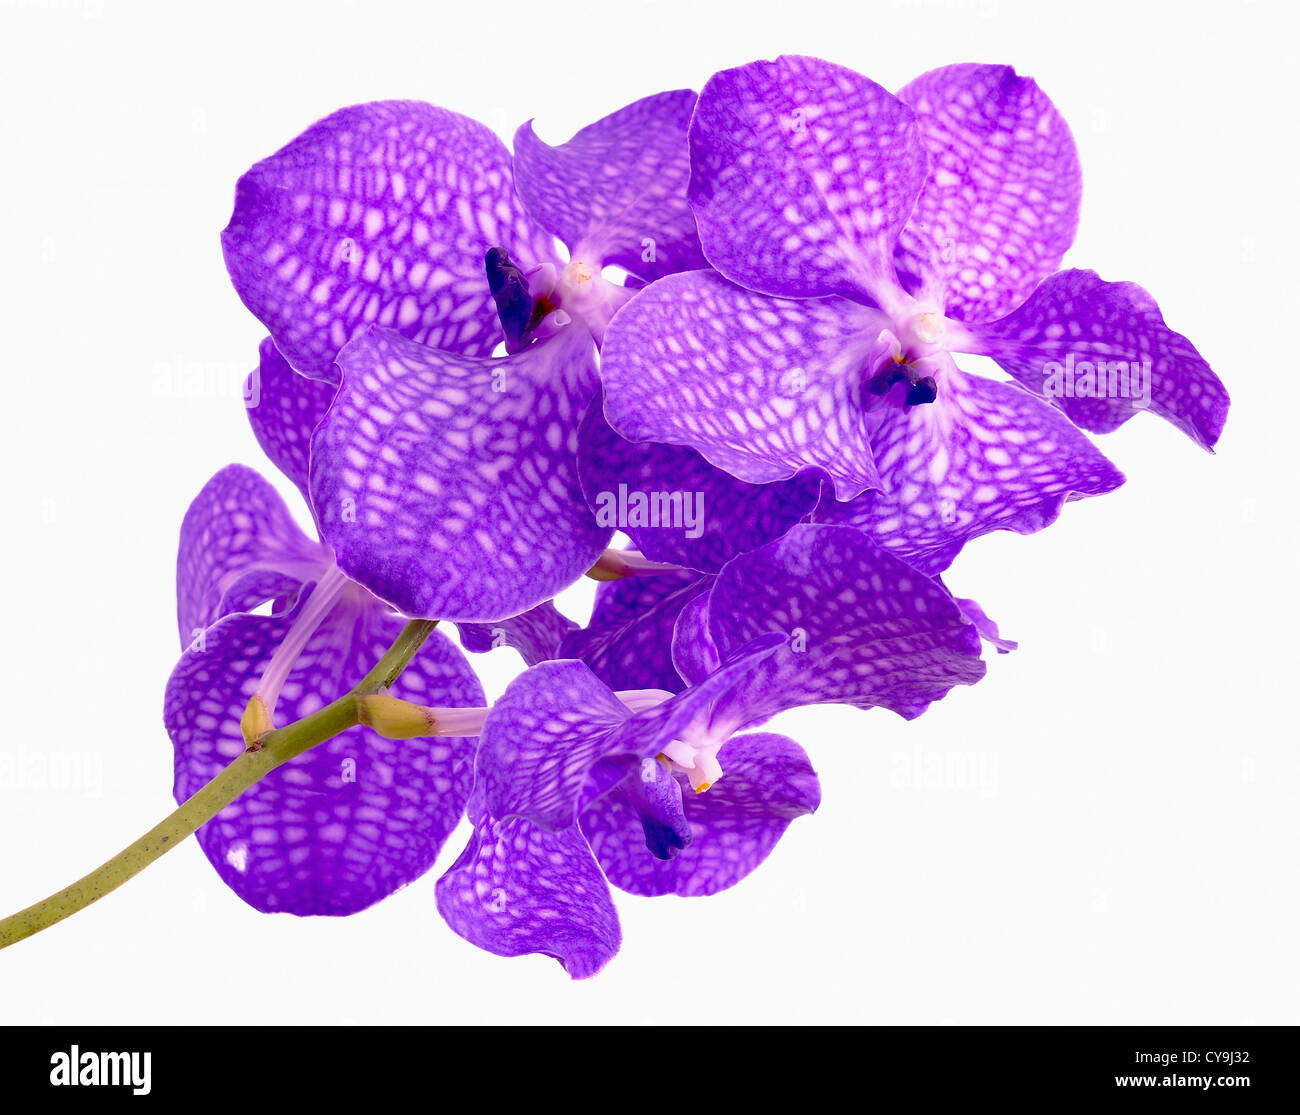 Ascocenda cultivar, Vanda orchid, Purple flowers against  White background. Stock Photo